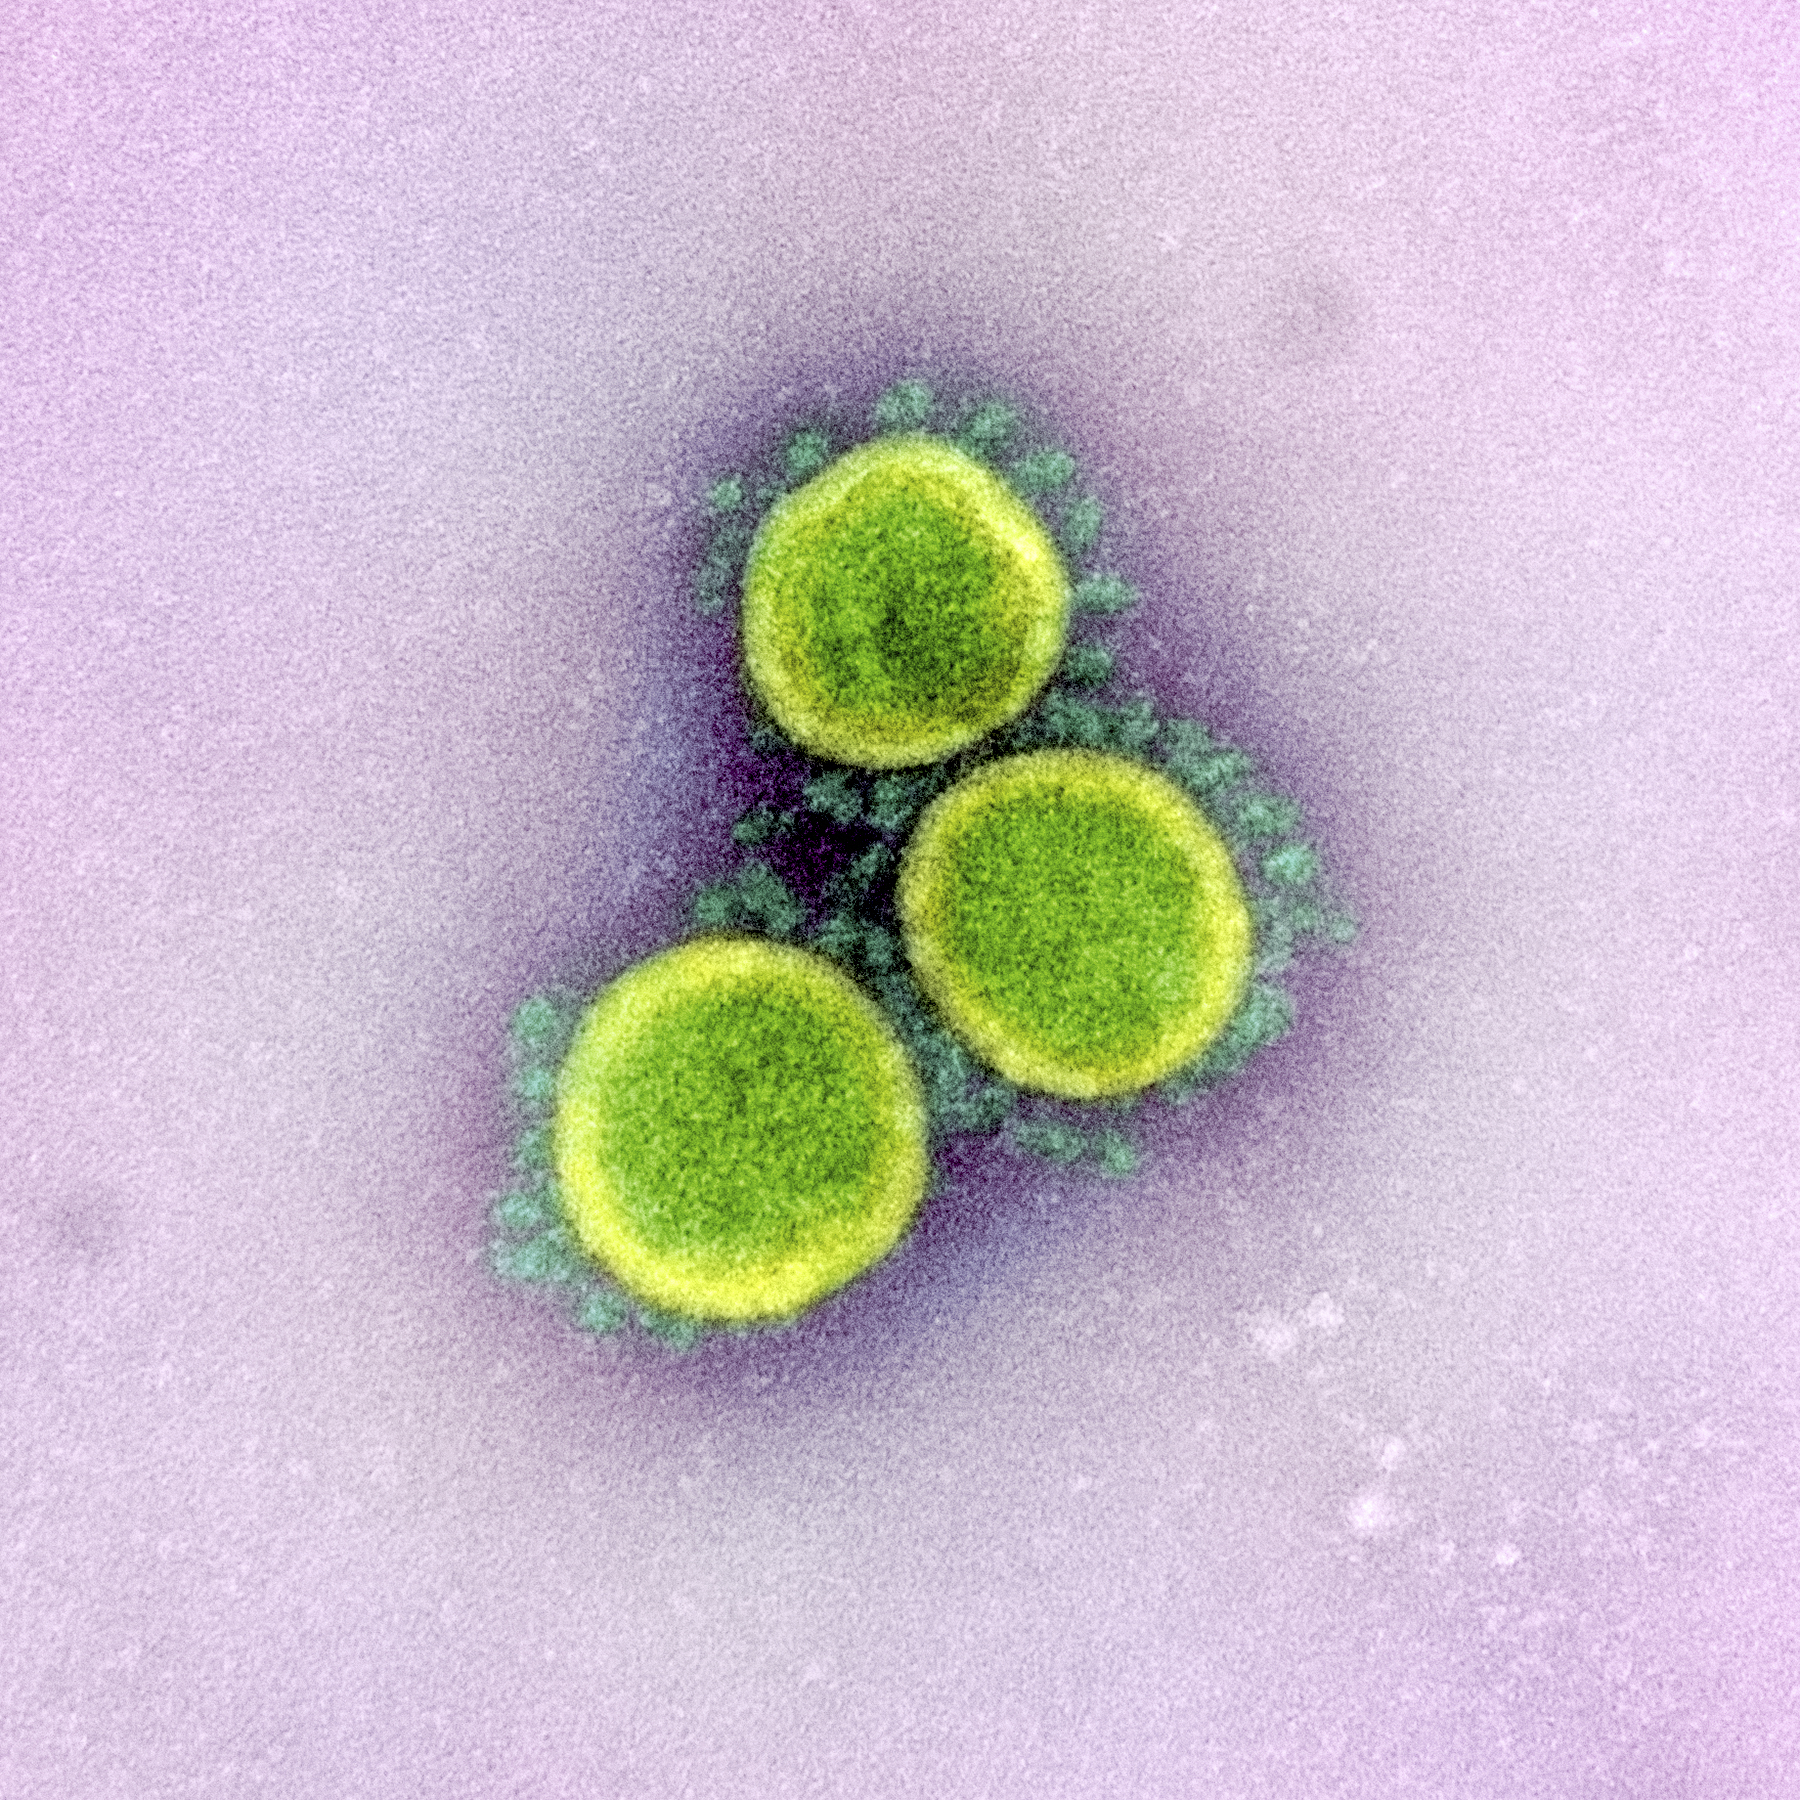 Coronavirus seen under an electron microscope